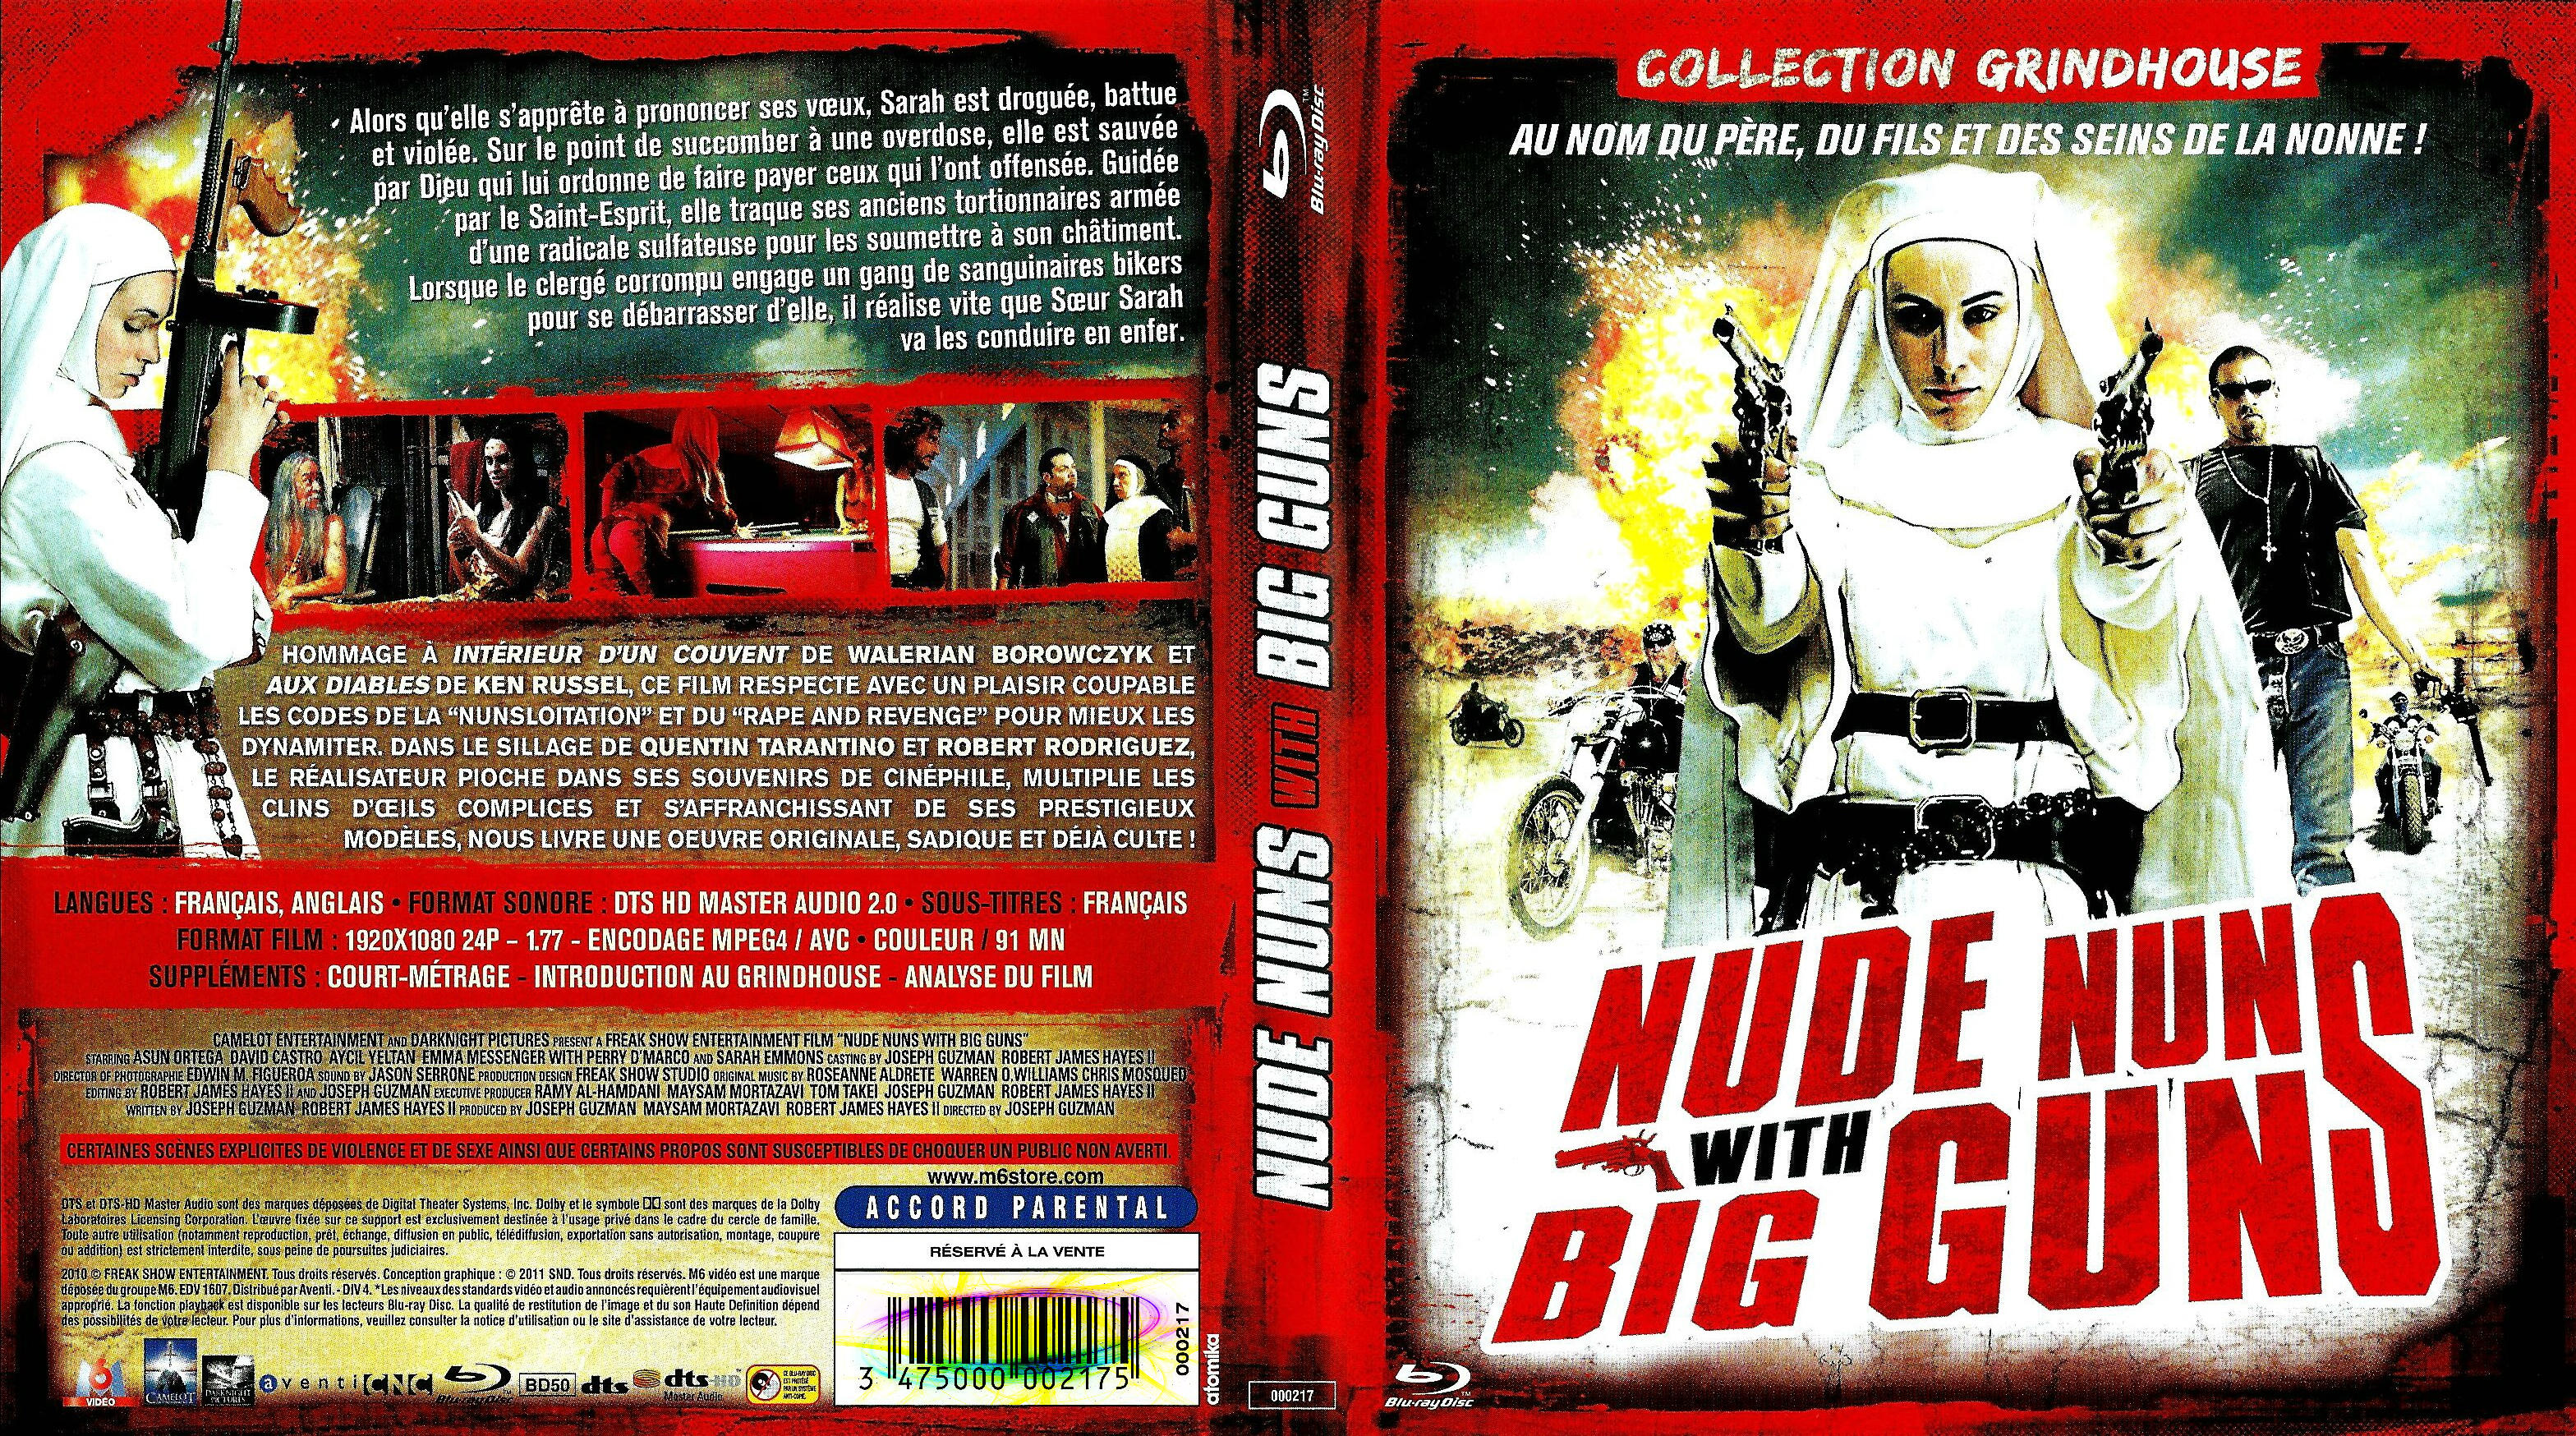 Jaquette DVD Nude Nuns With Big Guns (BLU-RAY)